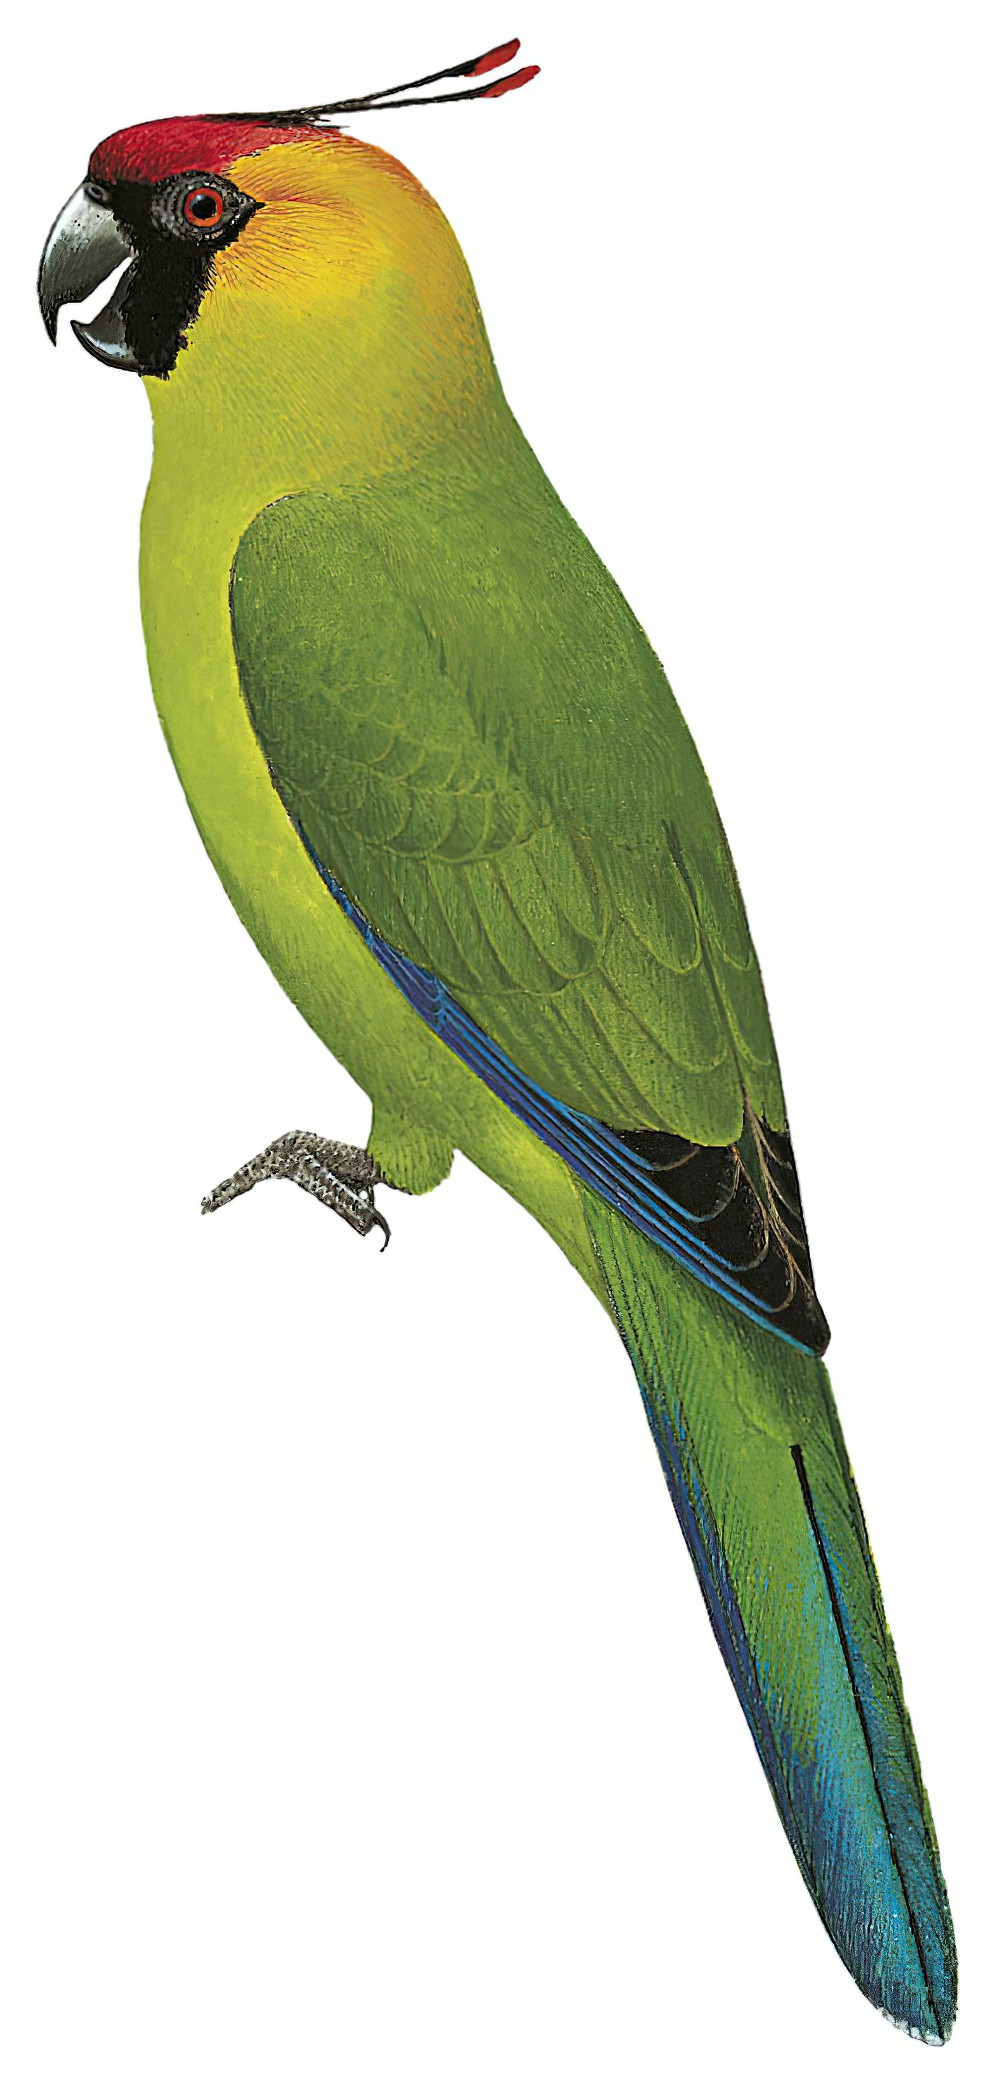 Horned Parakeet / Eunymphicus cornutus